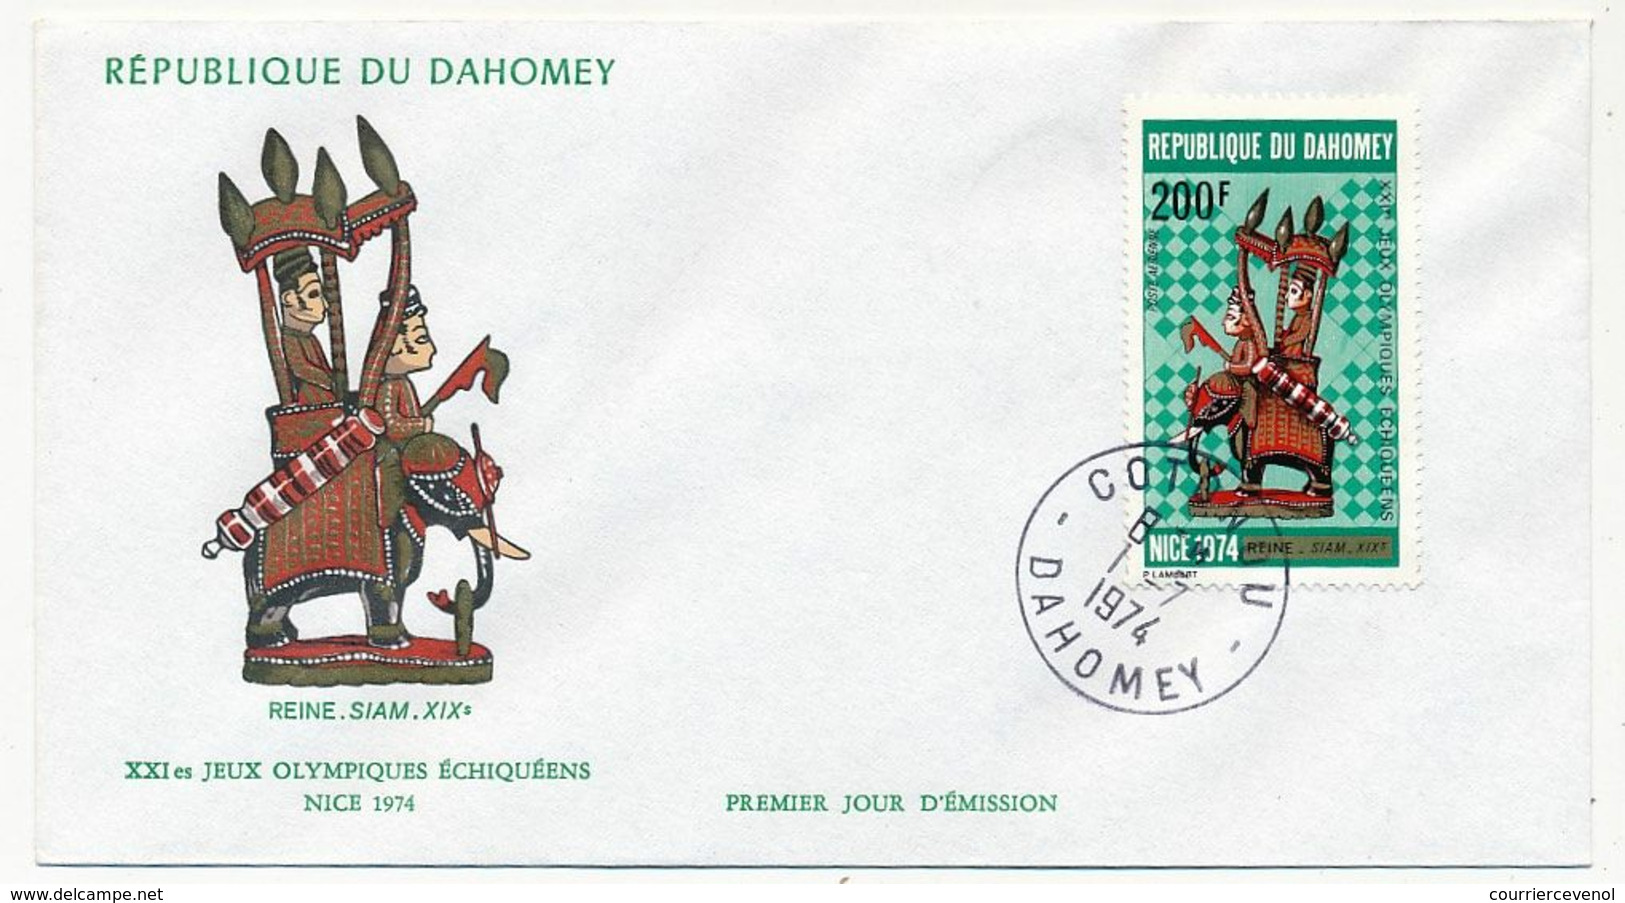 DAHOMEY => 2 Enveloppes FDC => XXI° Jeux Olympiques Echiquéens - Nice 1974 - Benin - Dahomey (1960-...)